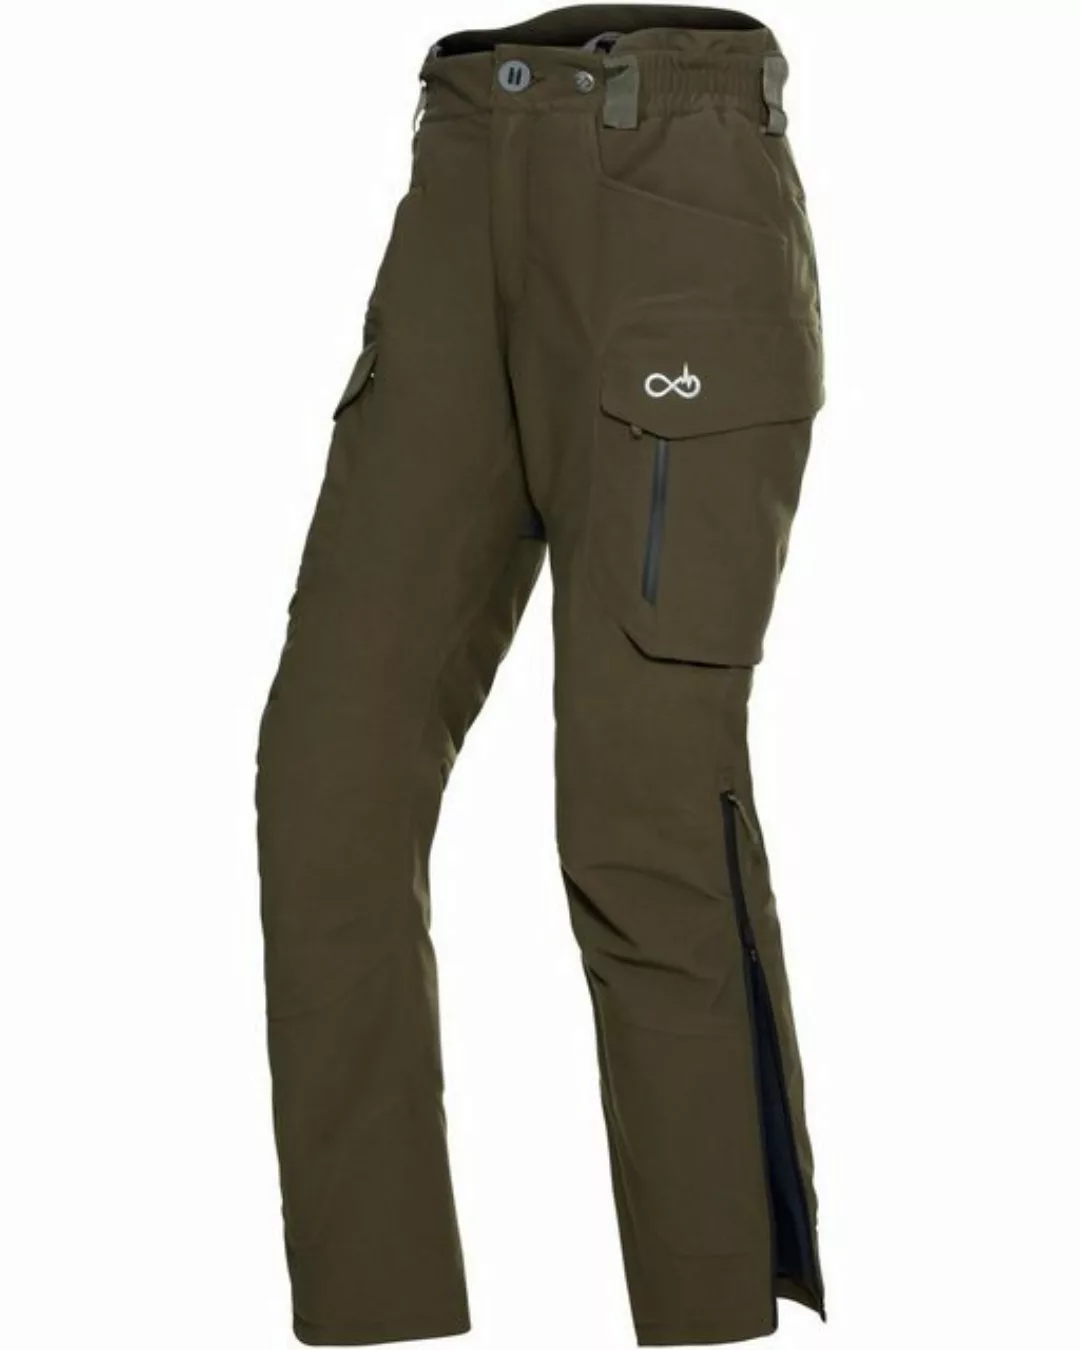 Merkel Gear Outdoorhose Hose WNTR Expedition G-LOFT® Pants günstig online kaufen